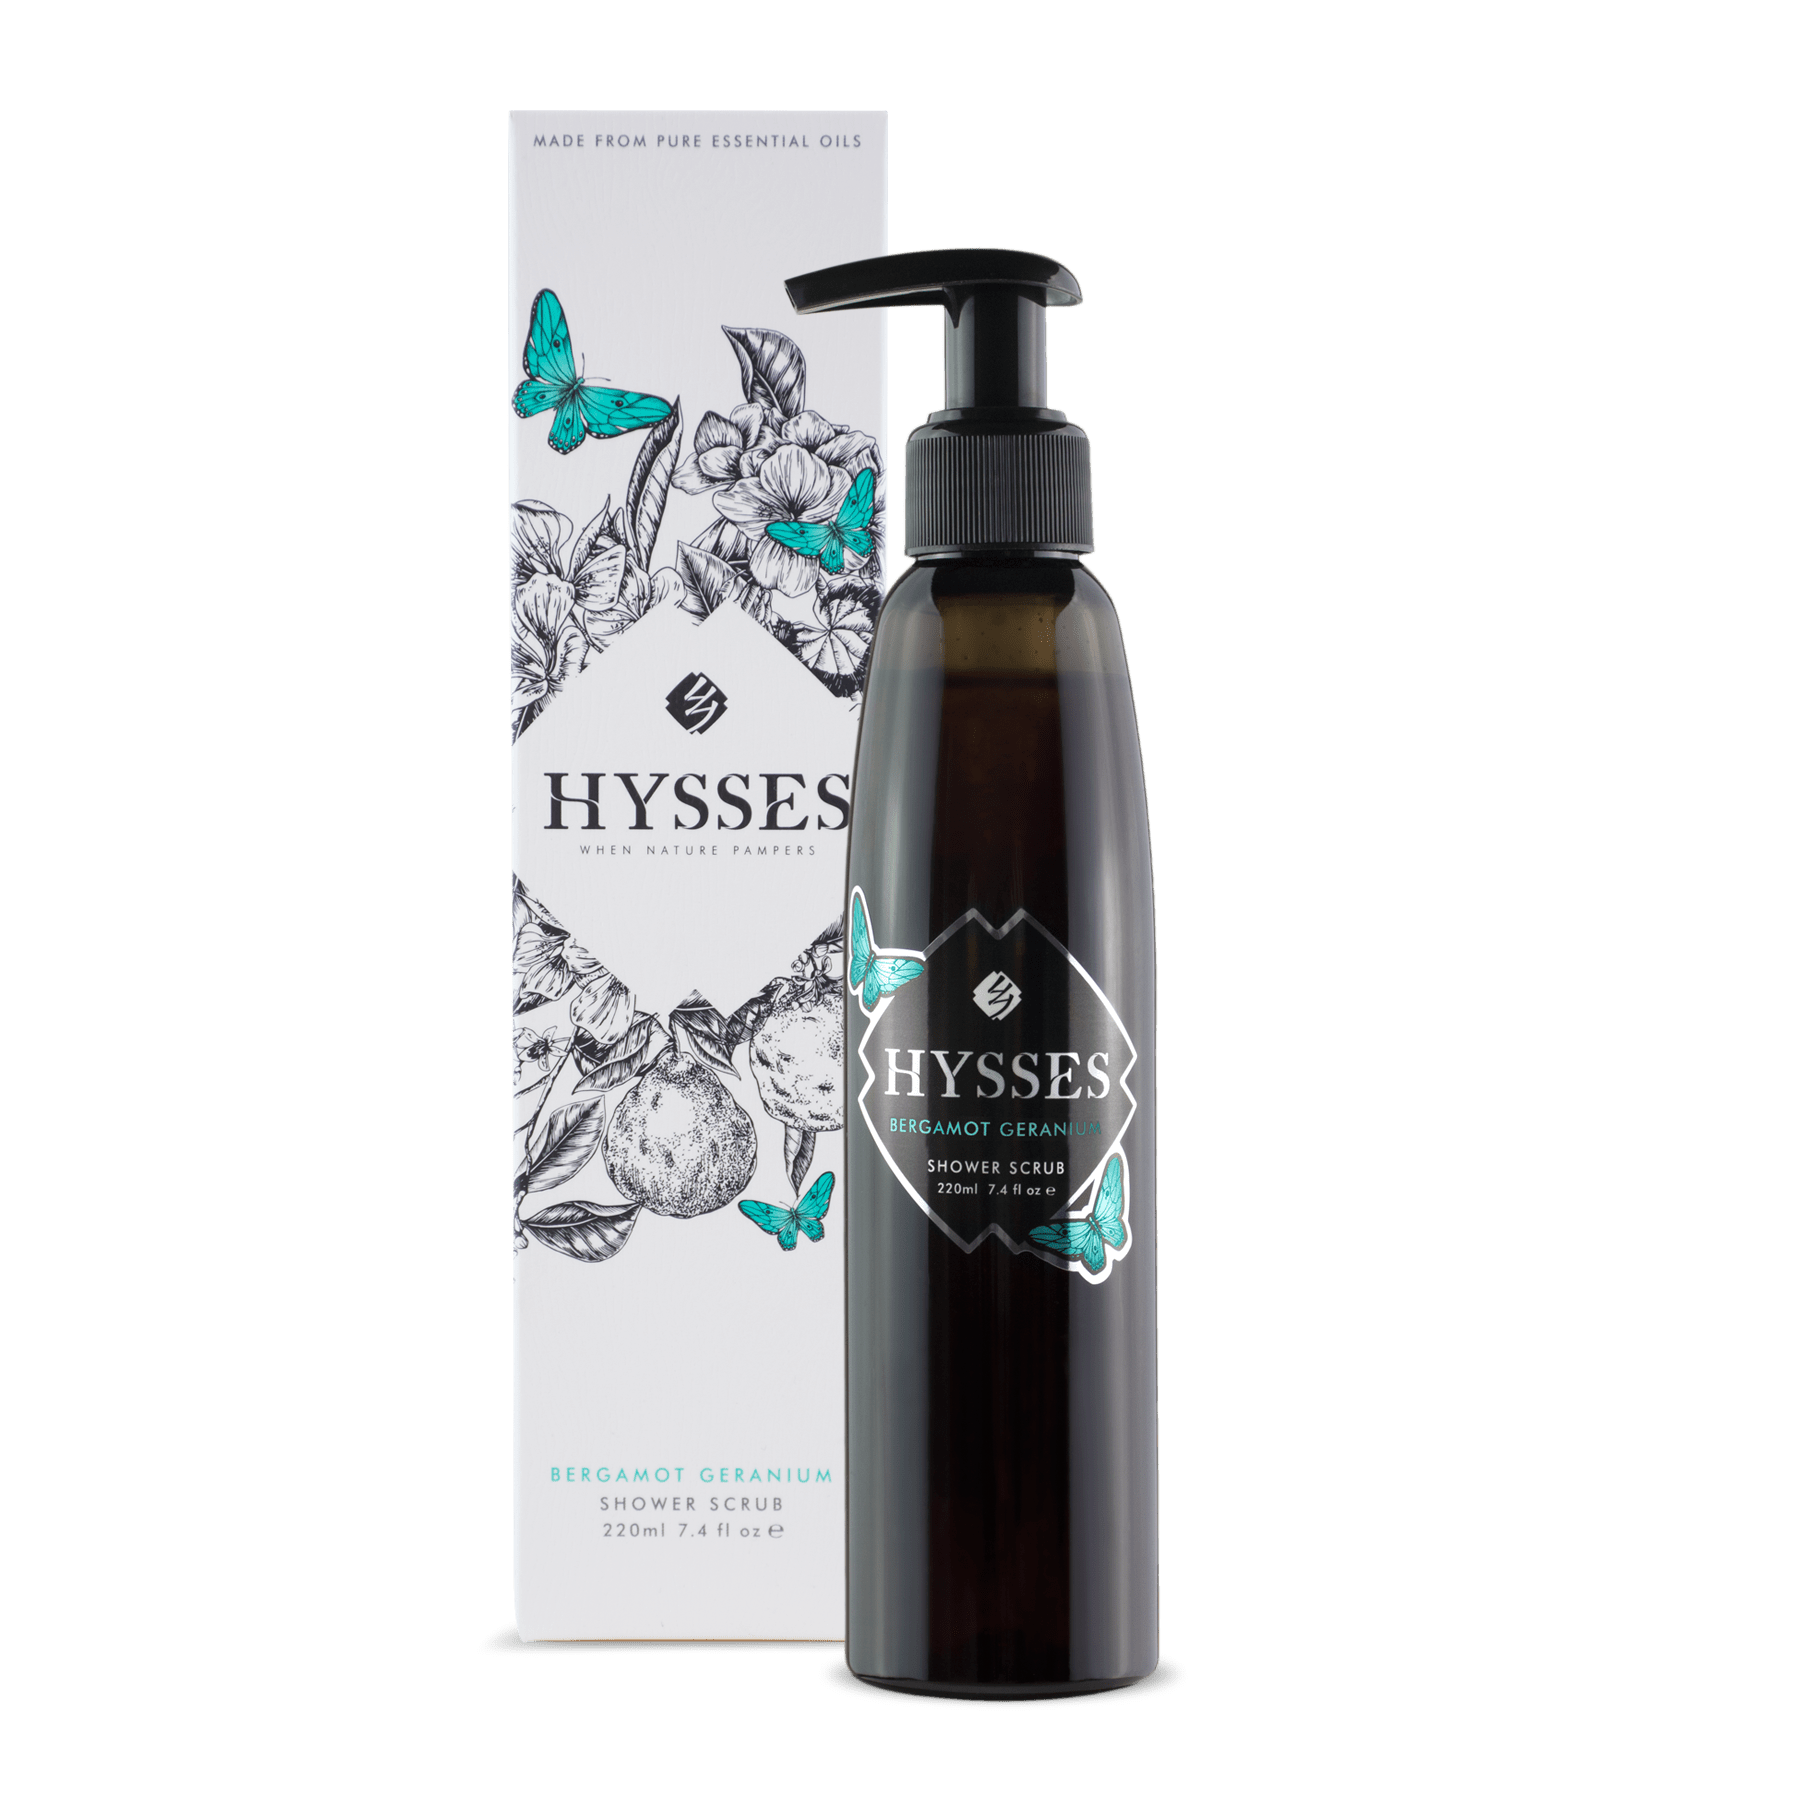 Hysses Body Care 220ml Shower Scrub Bergamot Geranium